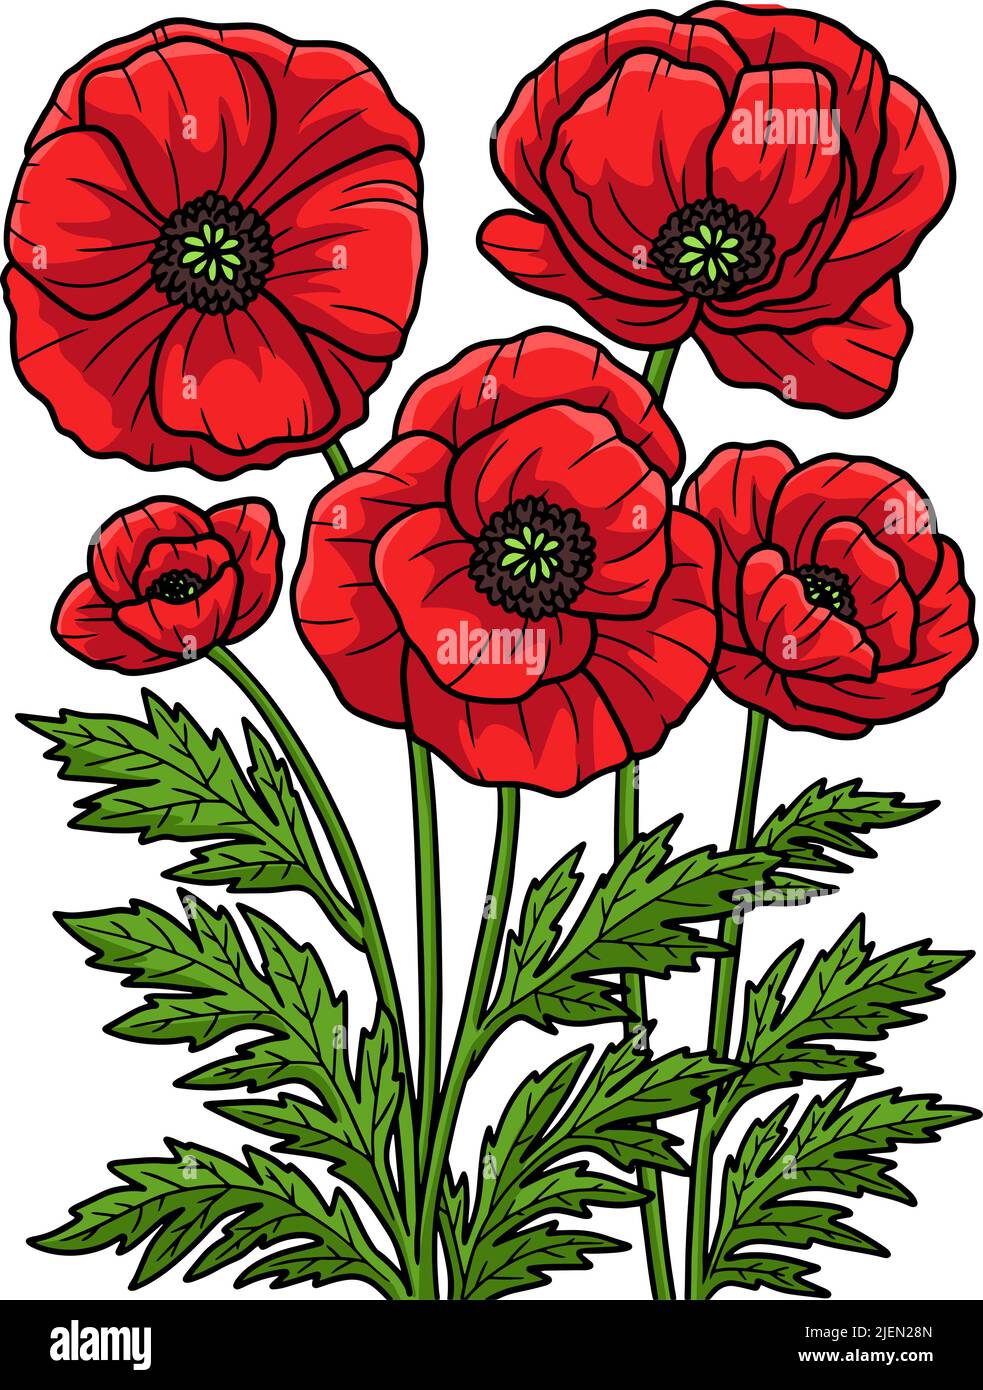 Cartoon poppy flower Stock Vector Images - Alamy